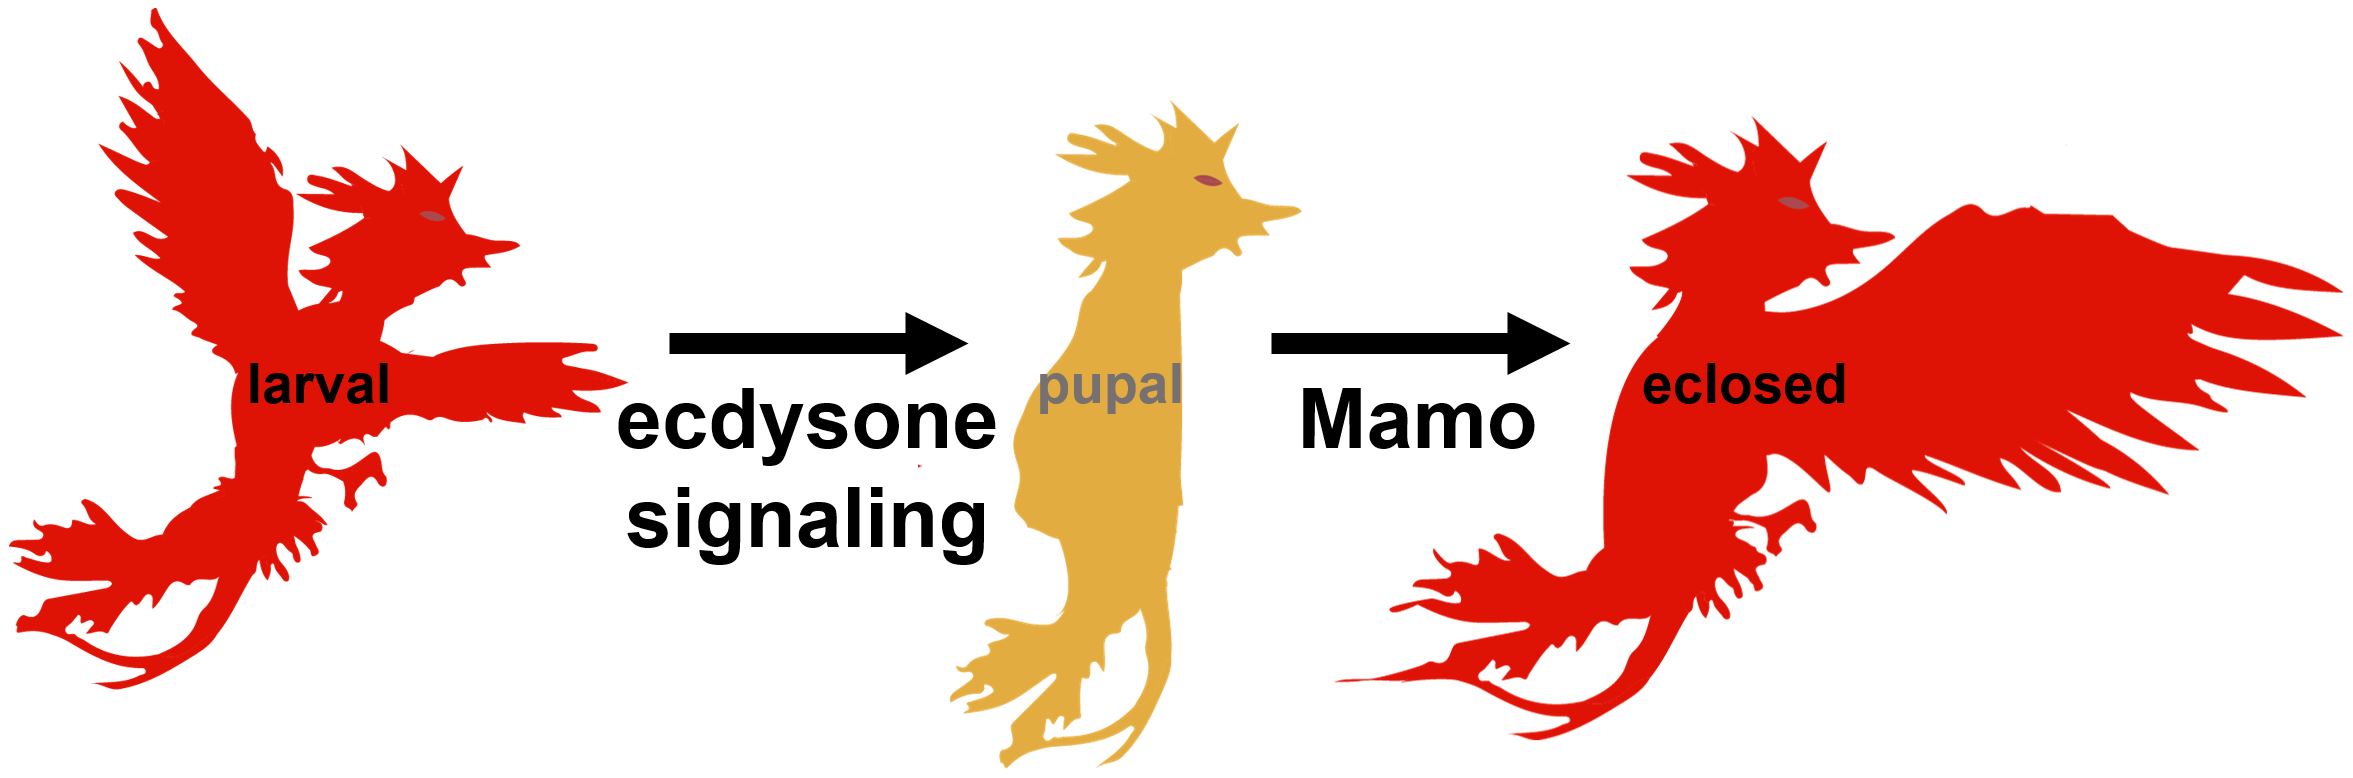 larval → ecdysone signaling → papal → Mamo → eclosed